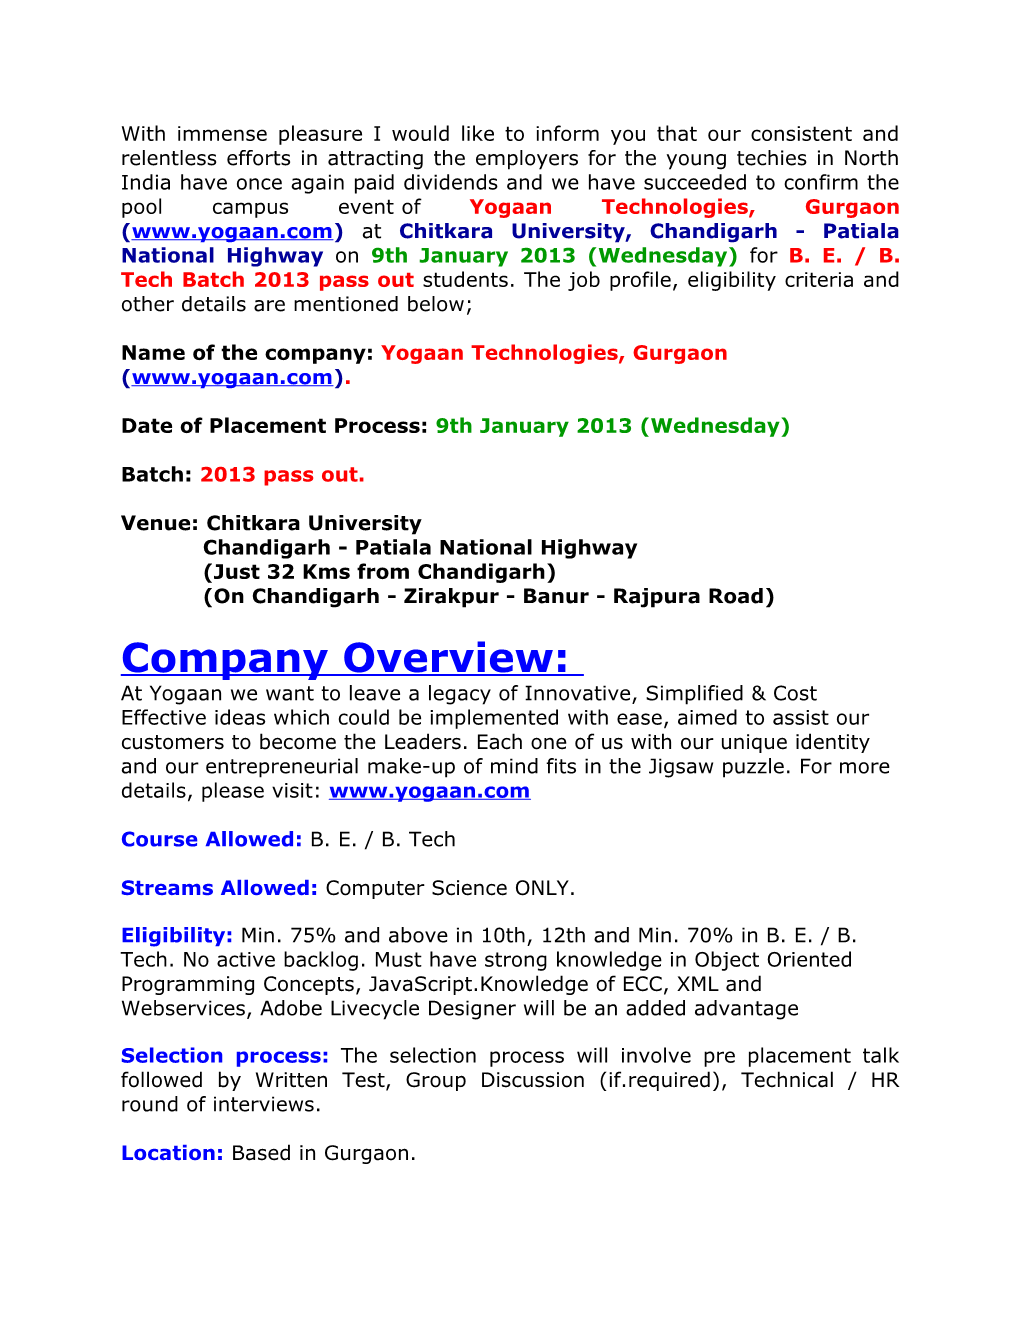 Name of the Company: Yogaan Technologies, Gurgaon ( )